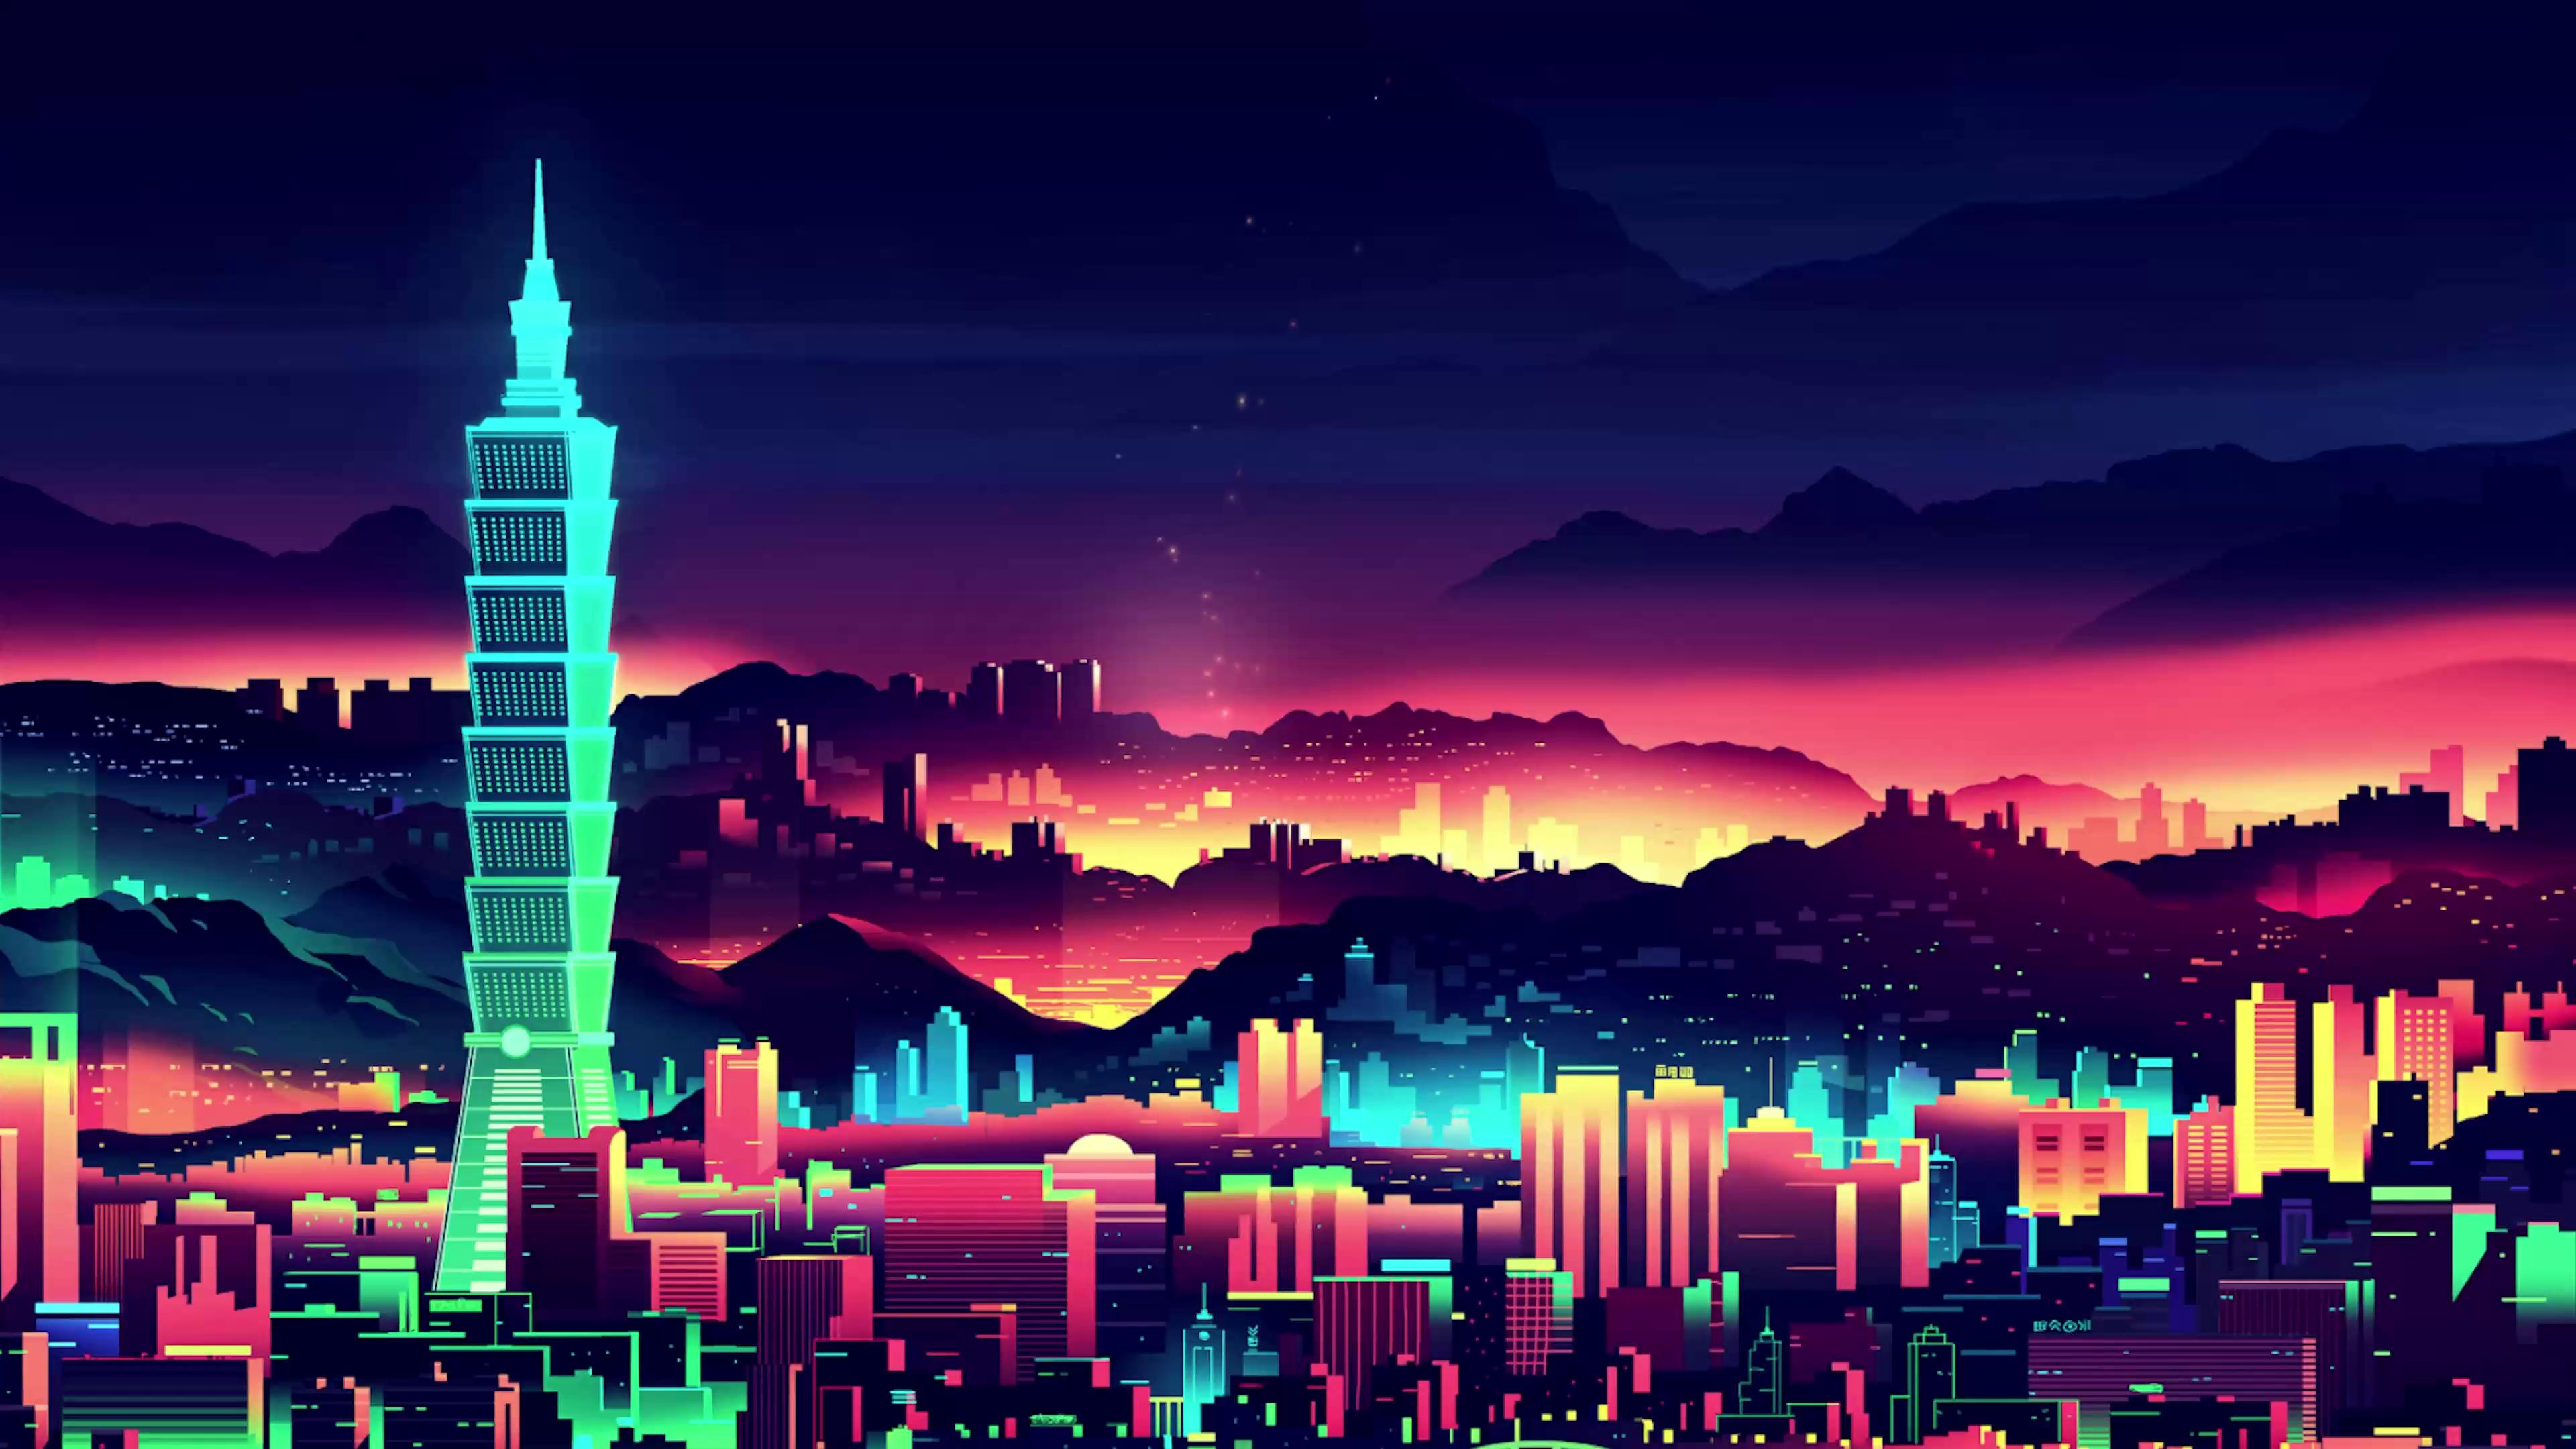 Night City Silhouette 4K wallpaper download